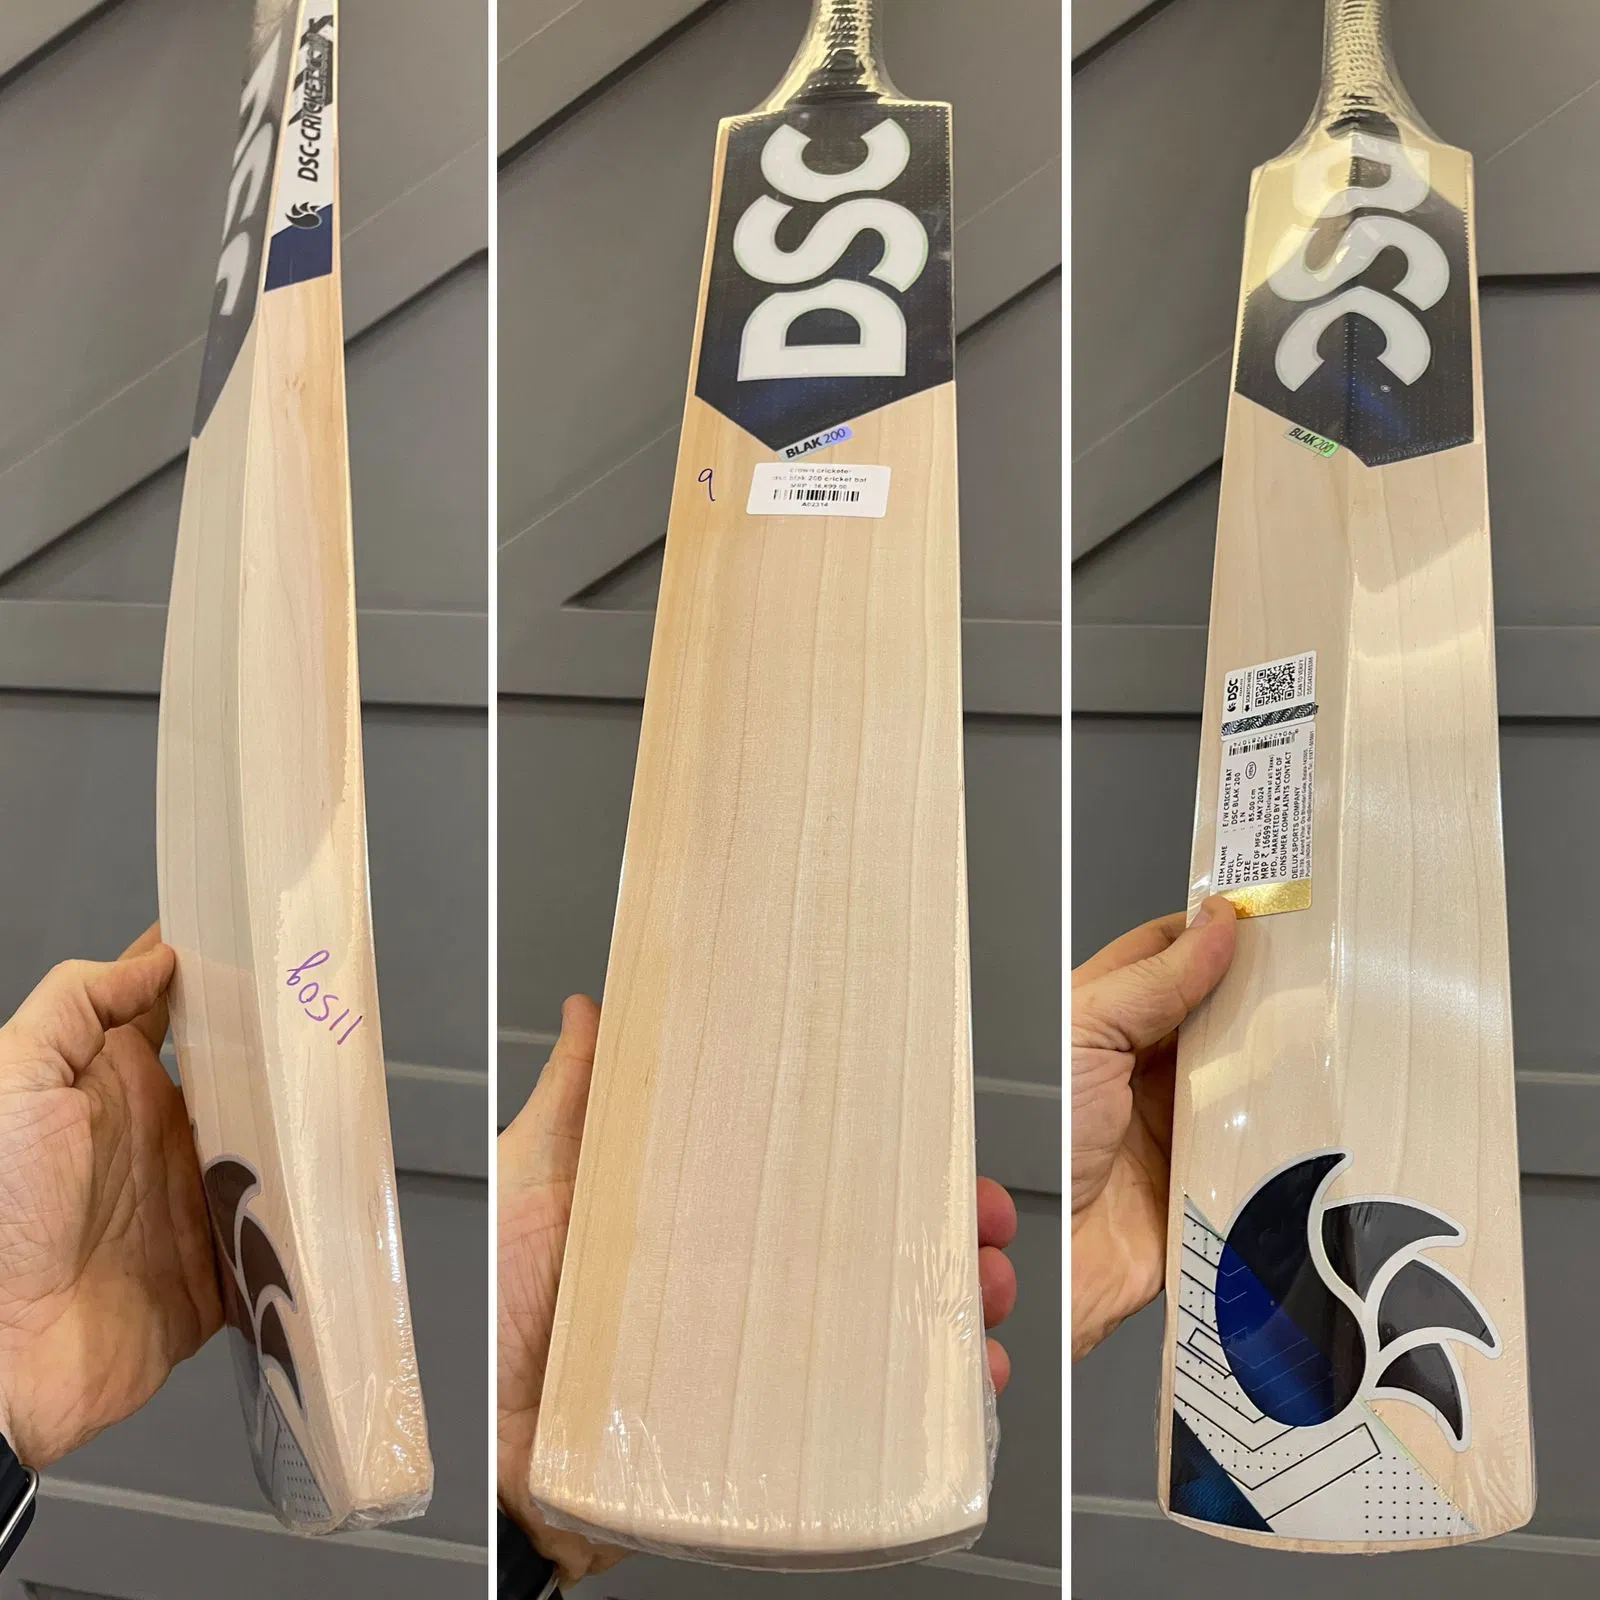 DSC Blak 200 Cricket Bat